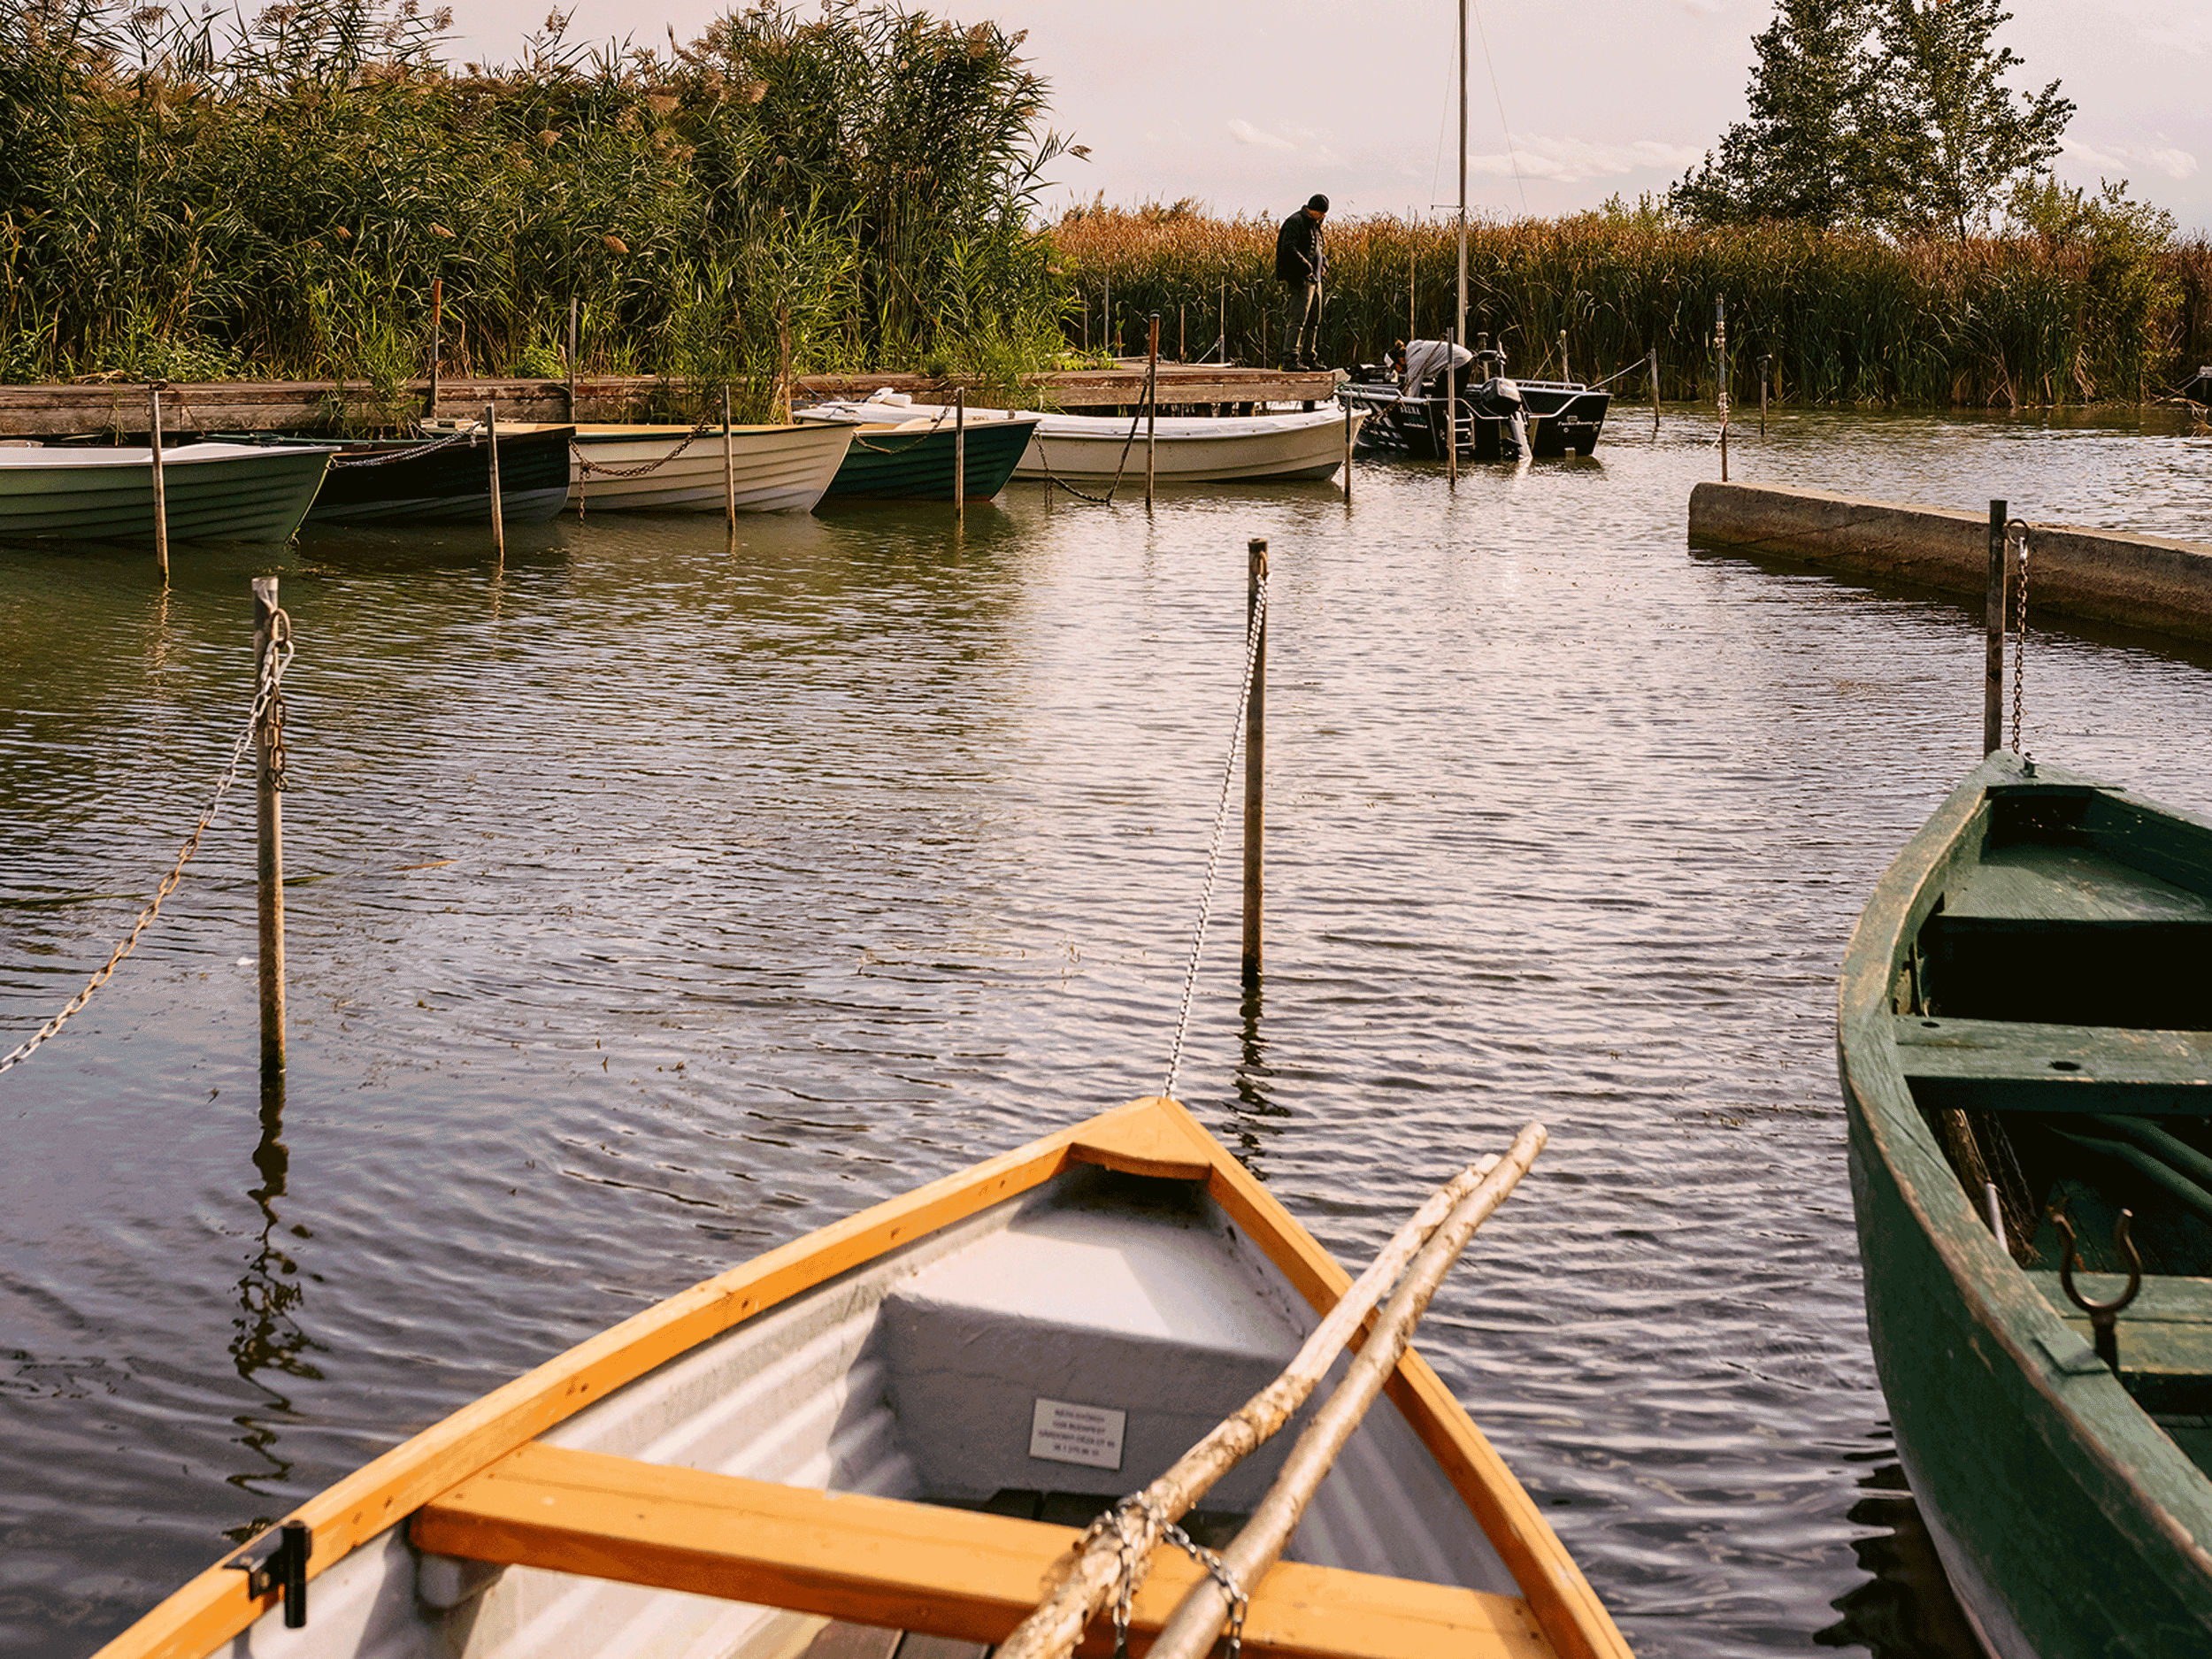 Boat in a river